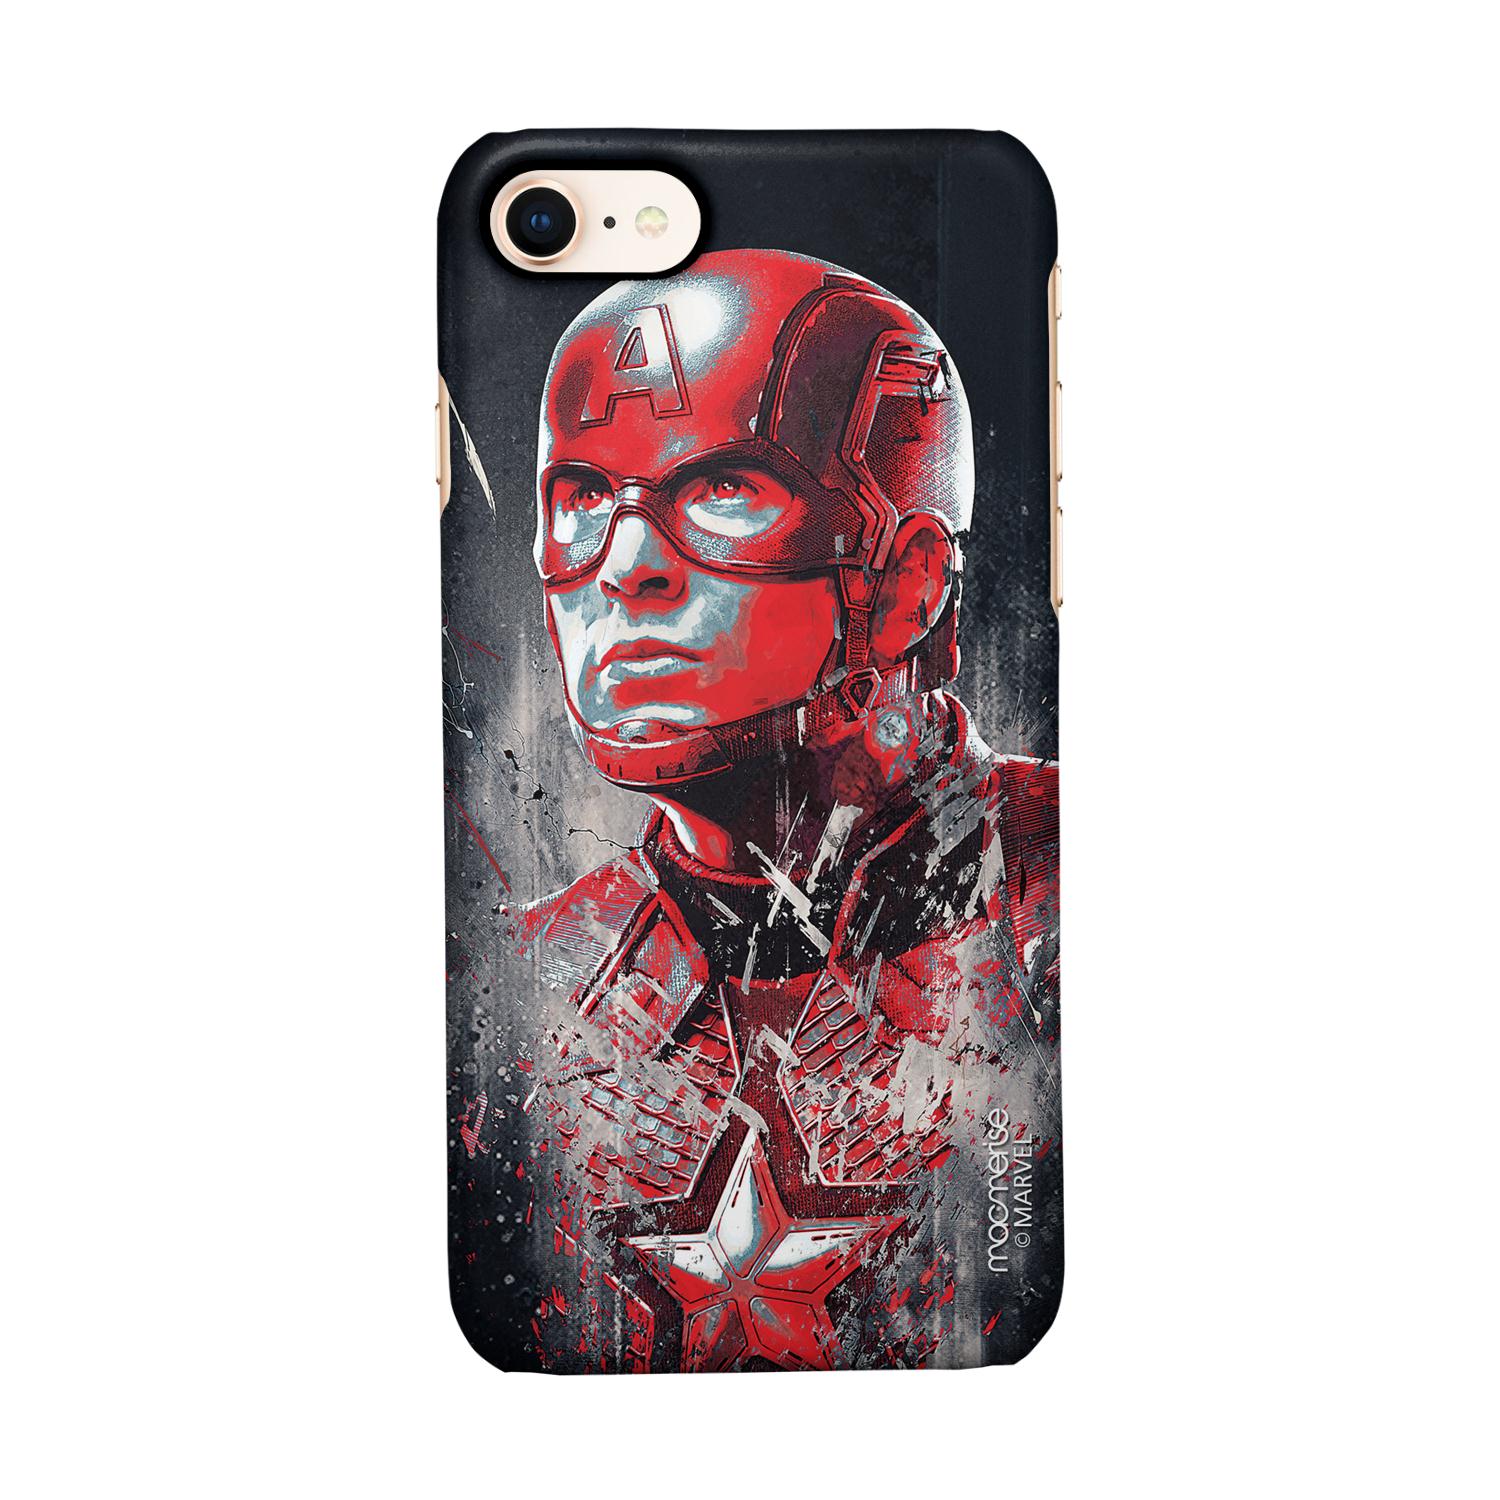 Buy Charcoal Art Captain America - Sleek Phone Case for iPhone 7 Online